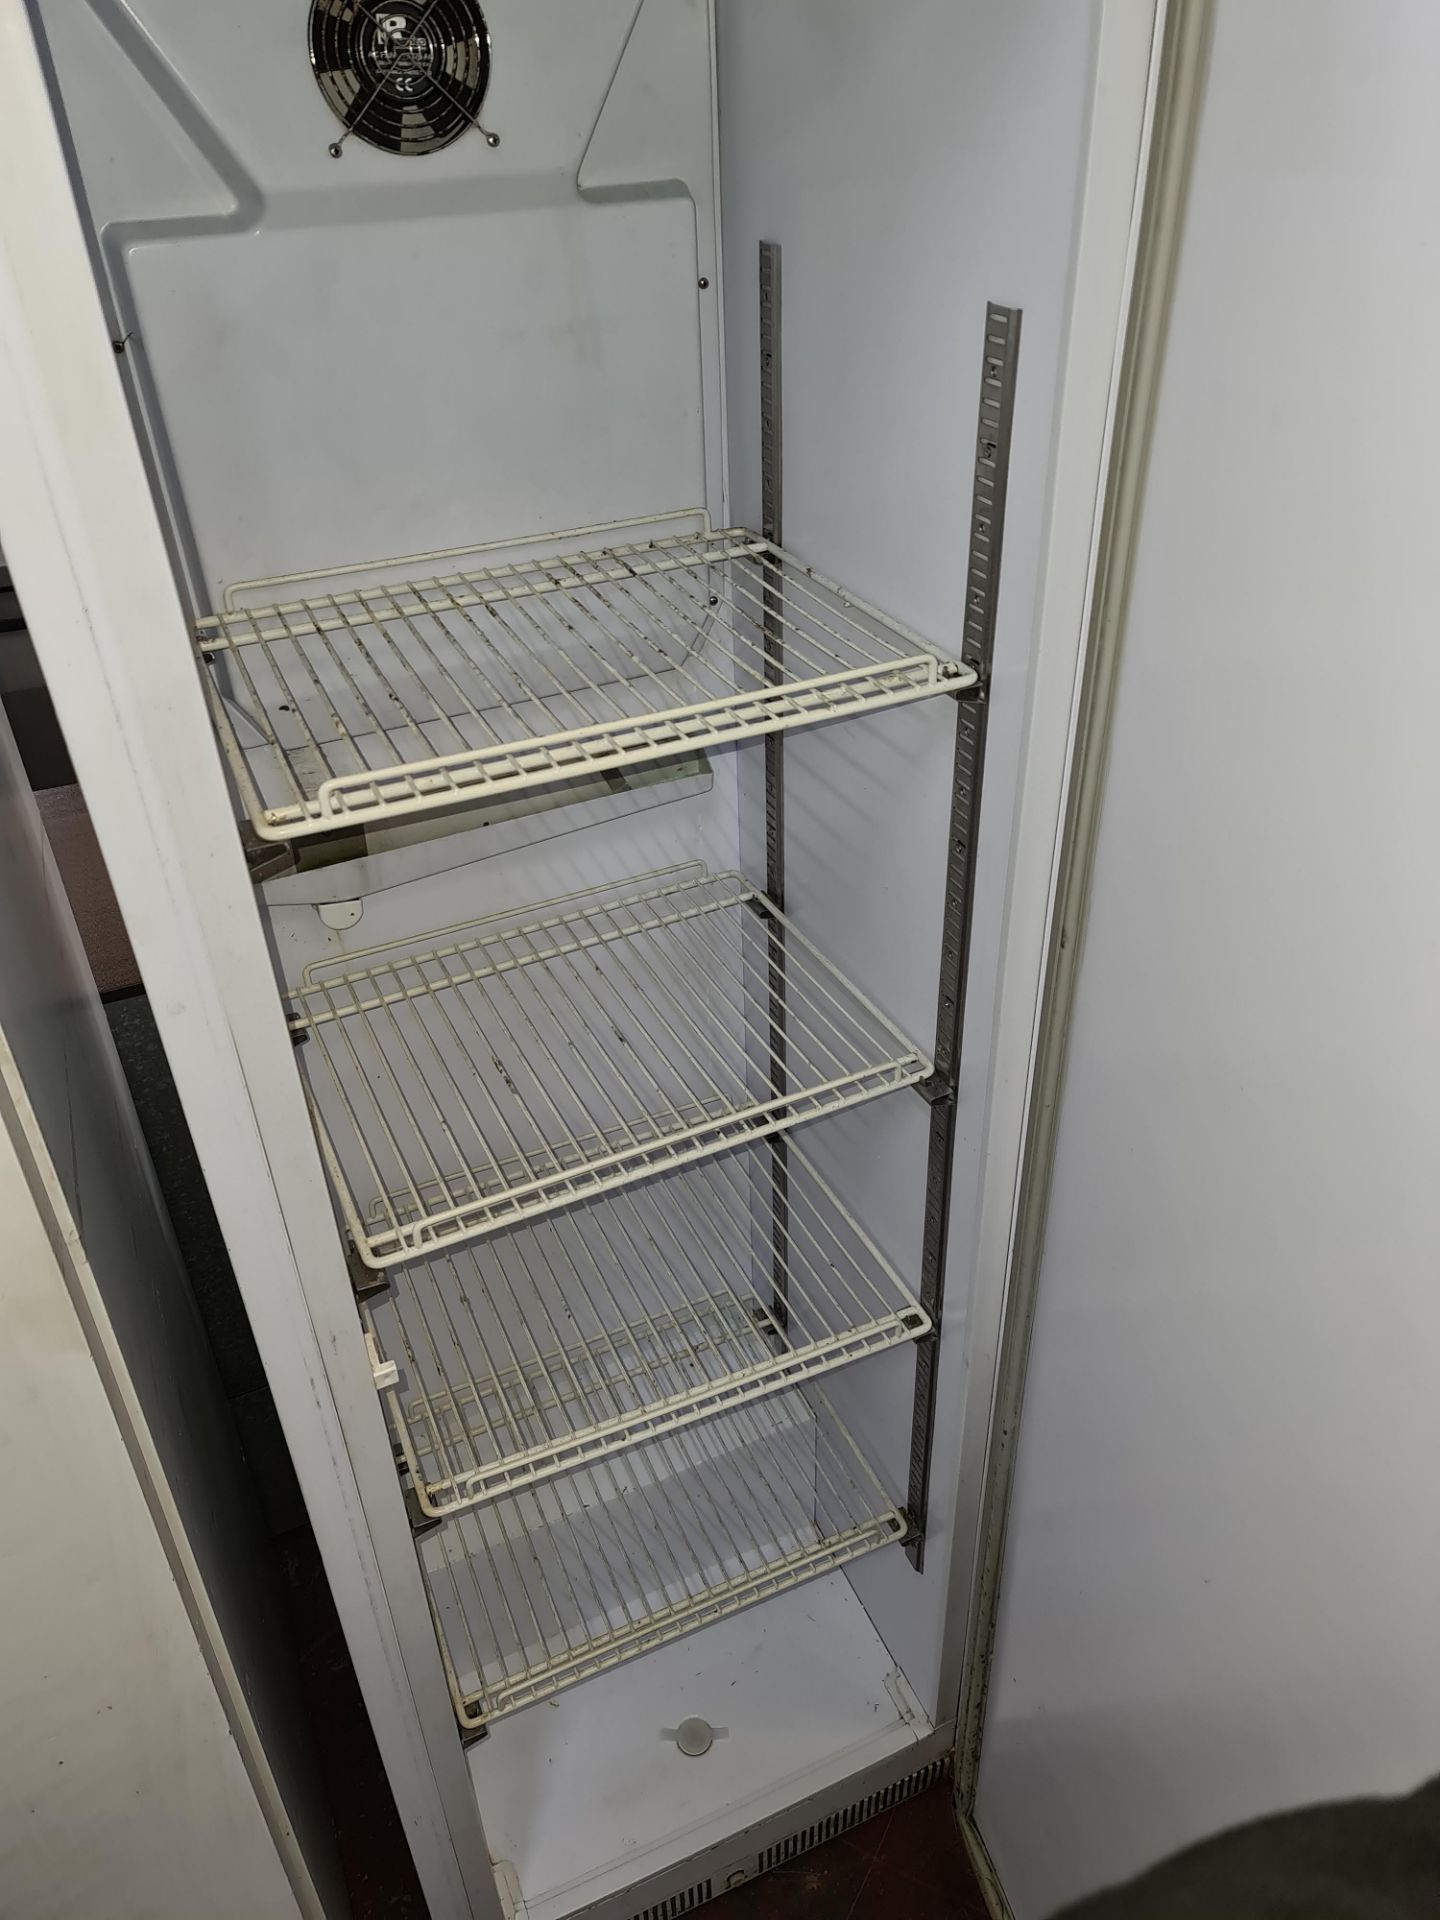 Iarp tall white freezer - Image 3 of 3